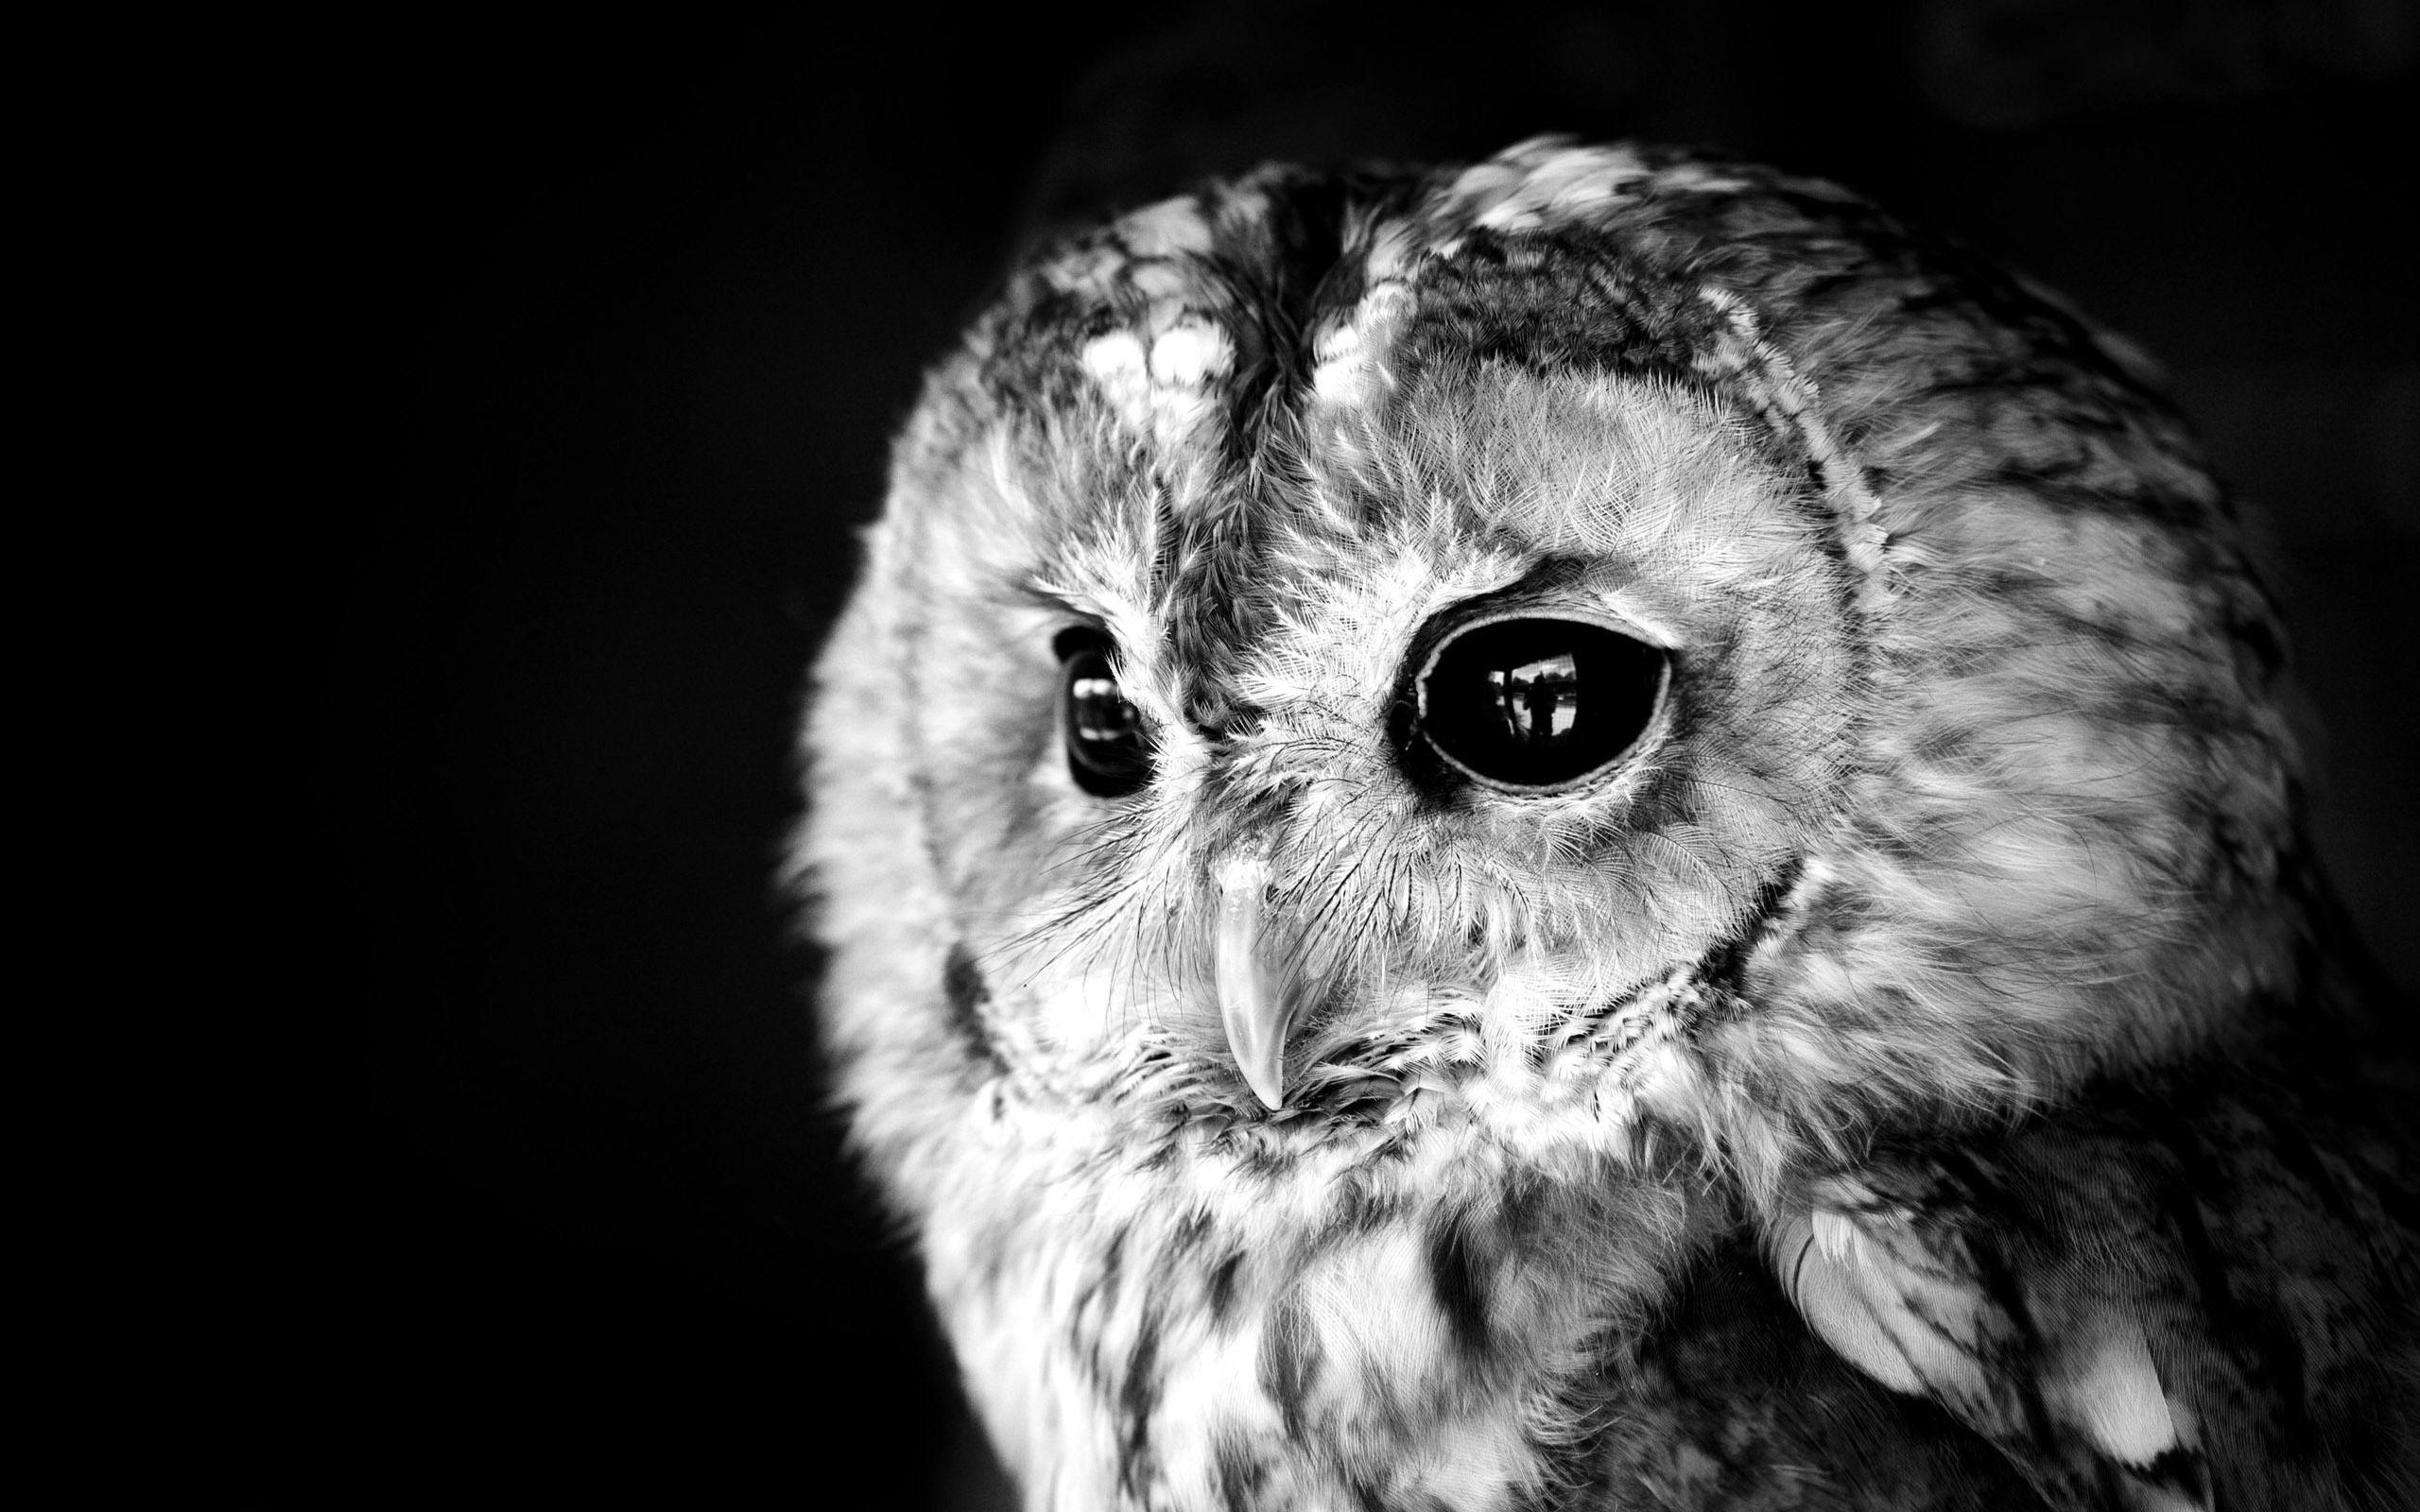 Monochrome Owl Face Wallpaper Background 62954 2560x1600 px